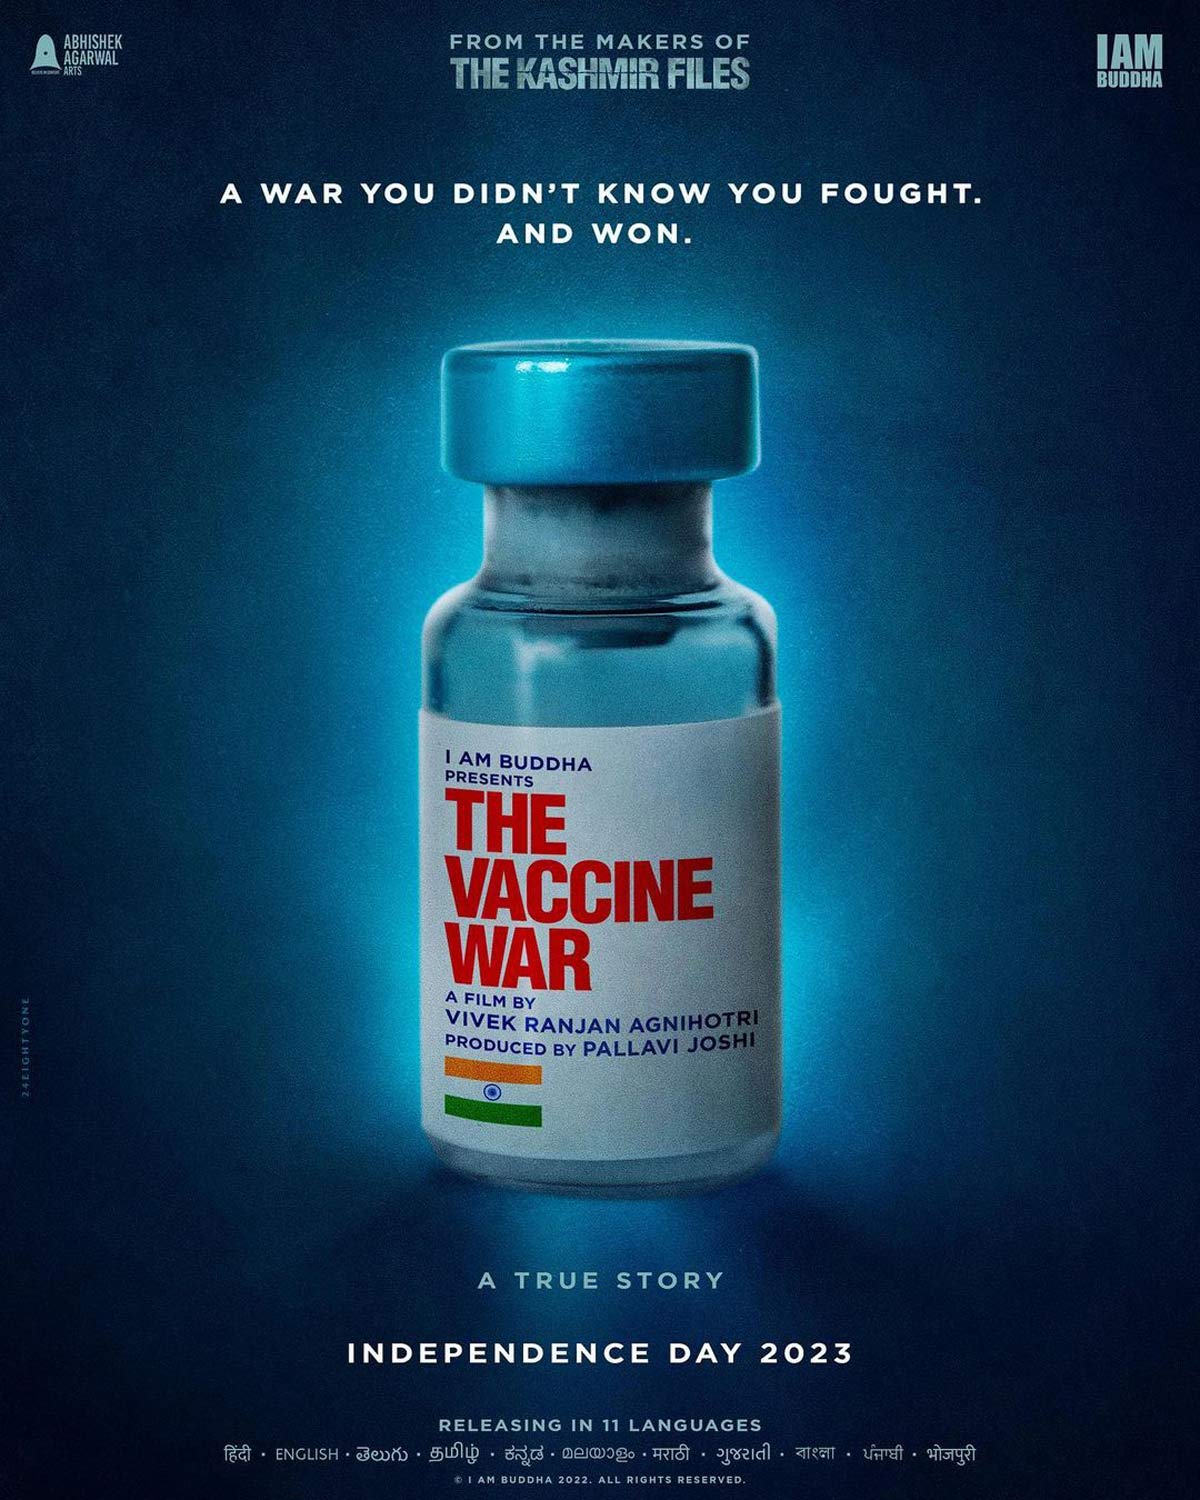 After Kashmir Files, It’s The Vaccine War